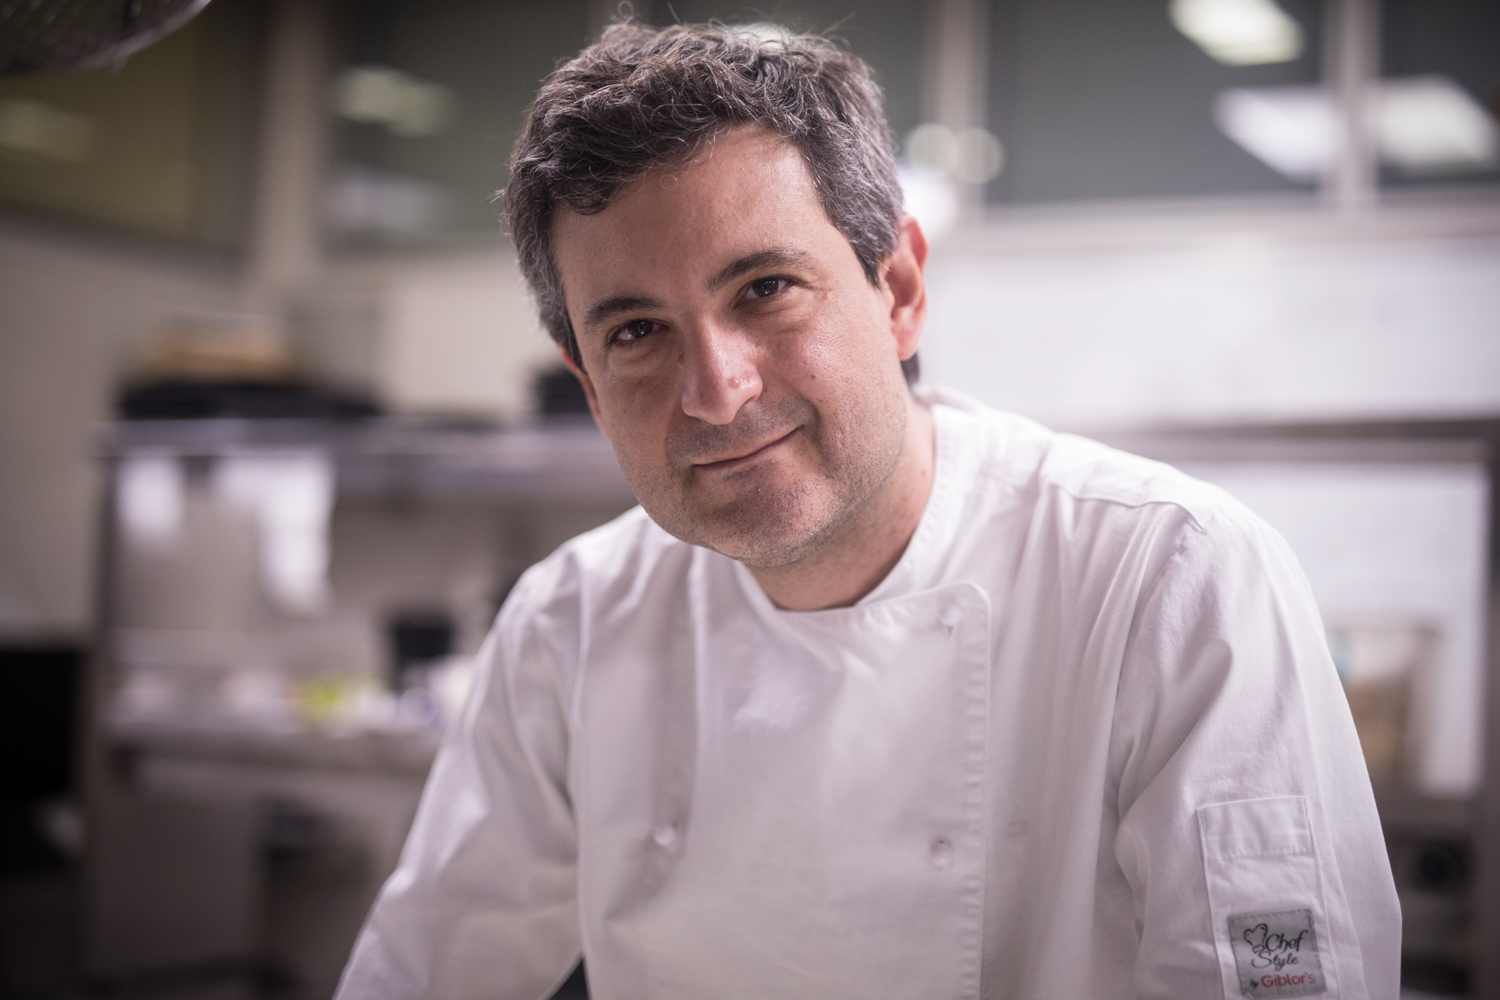 Santafe's new executive chef Luca Carleo launches an Italian-style revolution